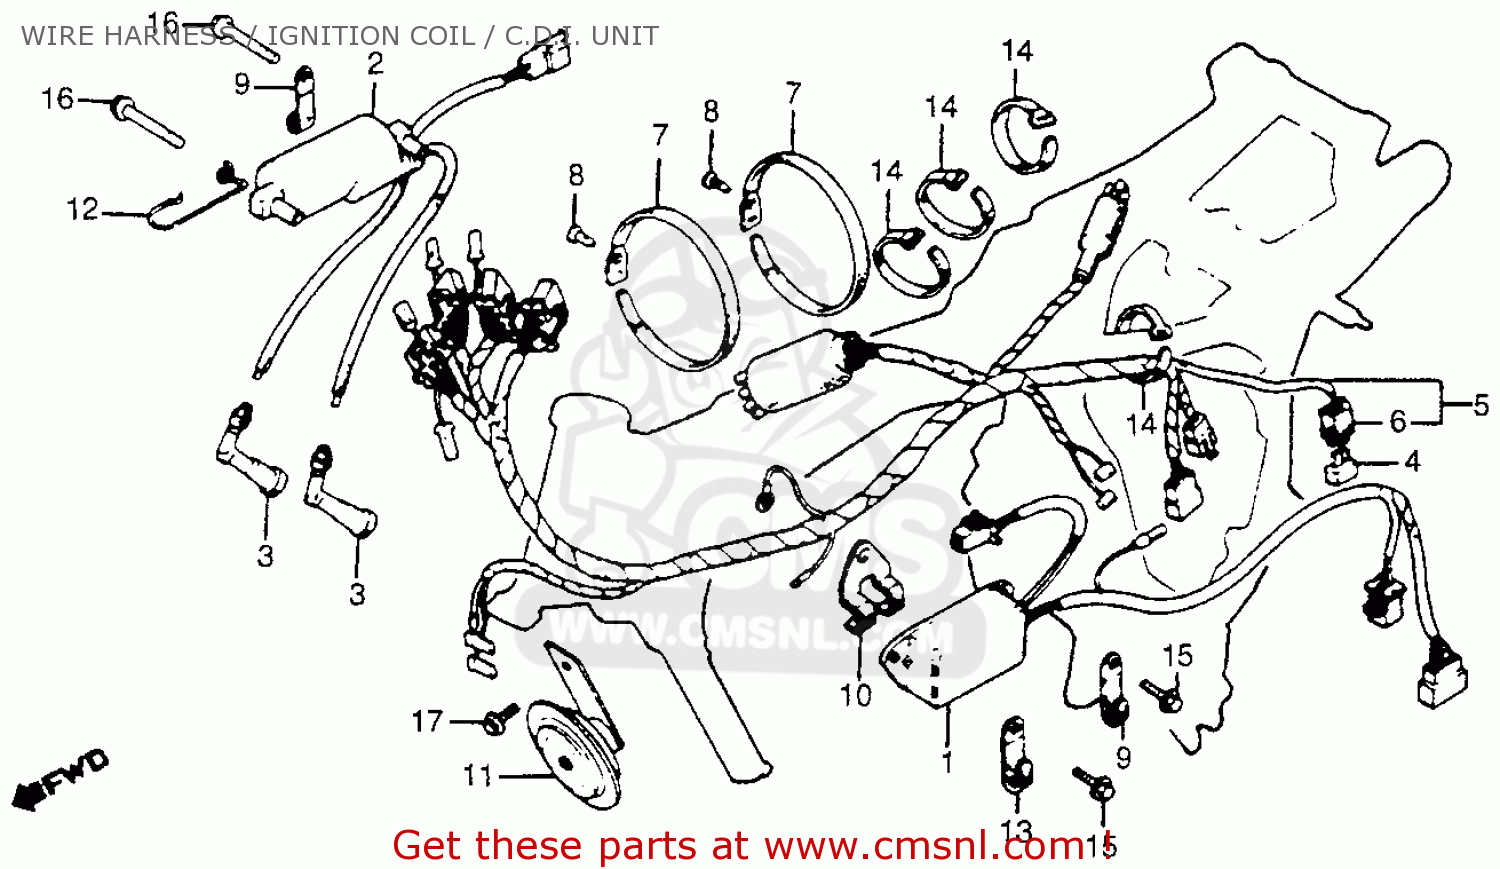 1981 Honda cm400a wiring diagram